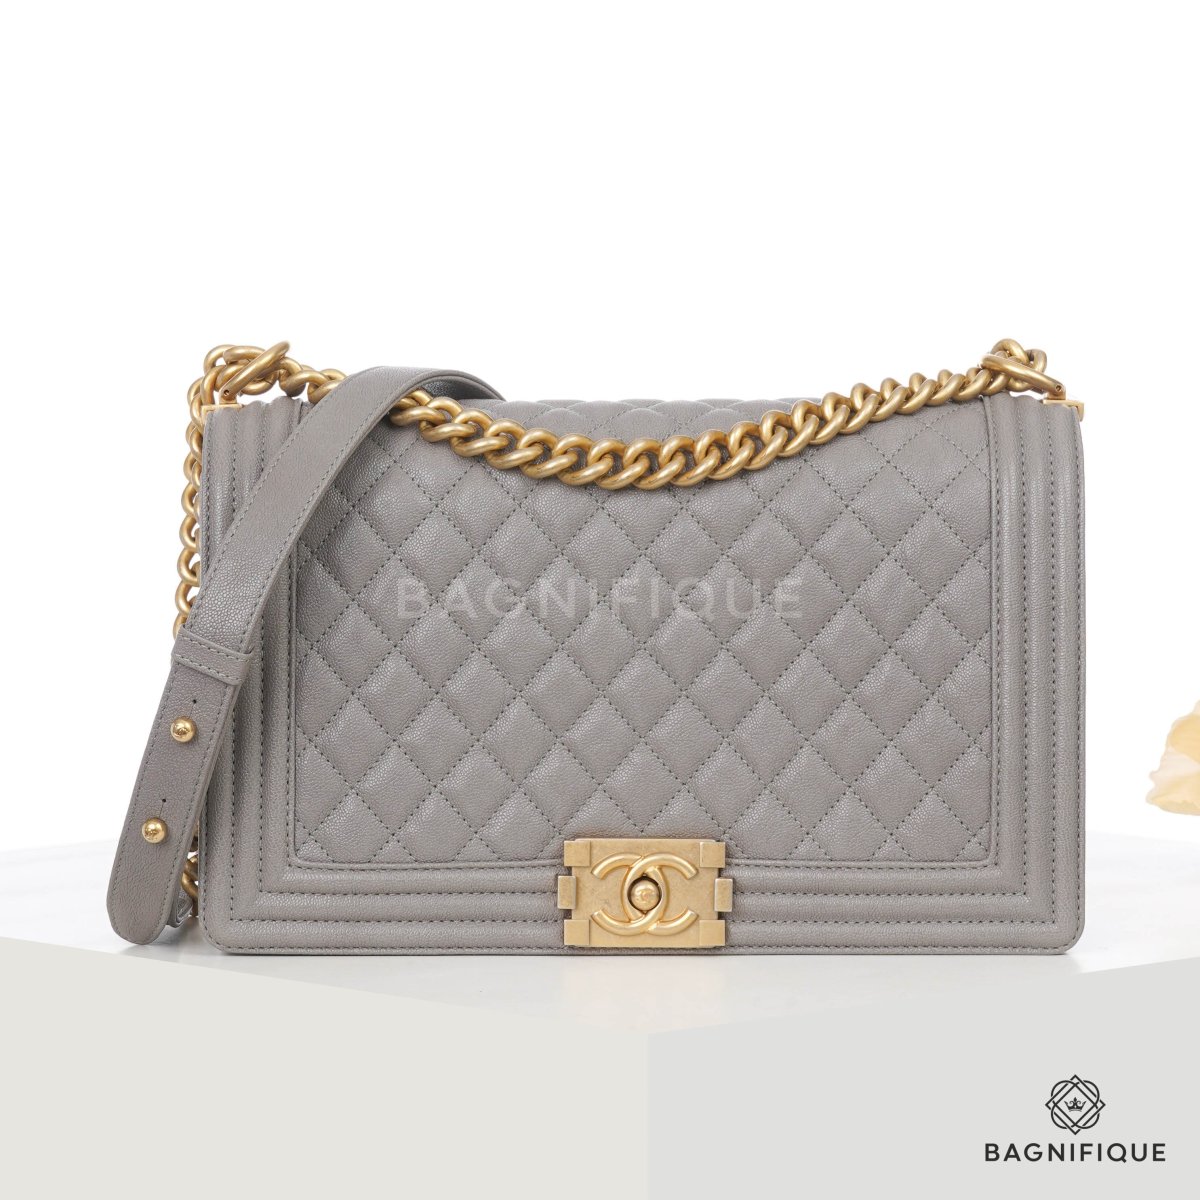 Chanel Light Grey Quilted Caviar Leather Medium Boy Bag